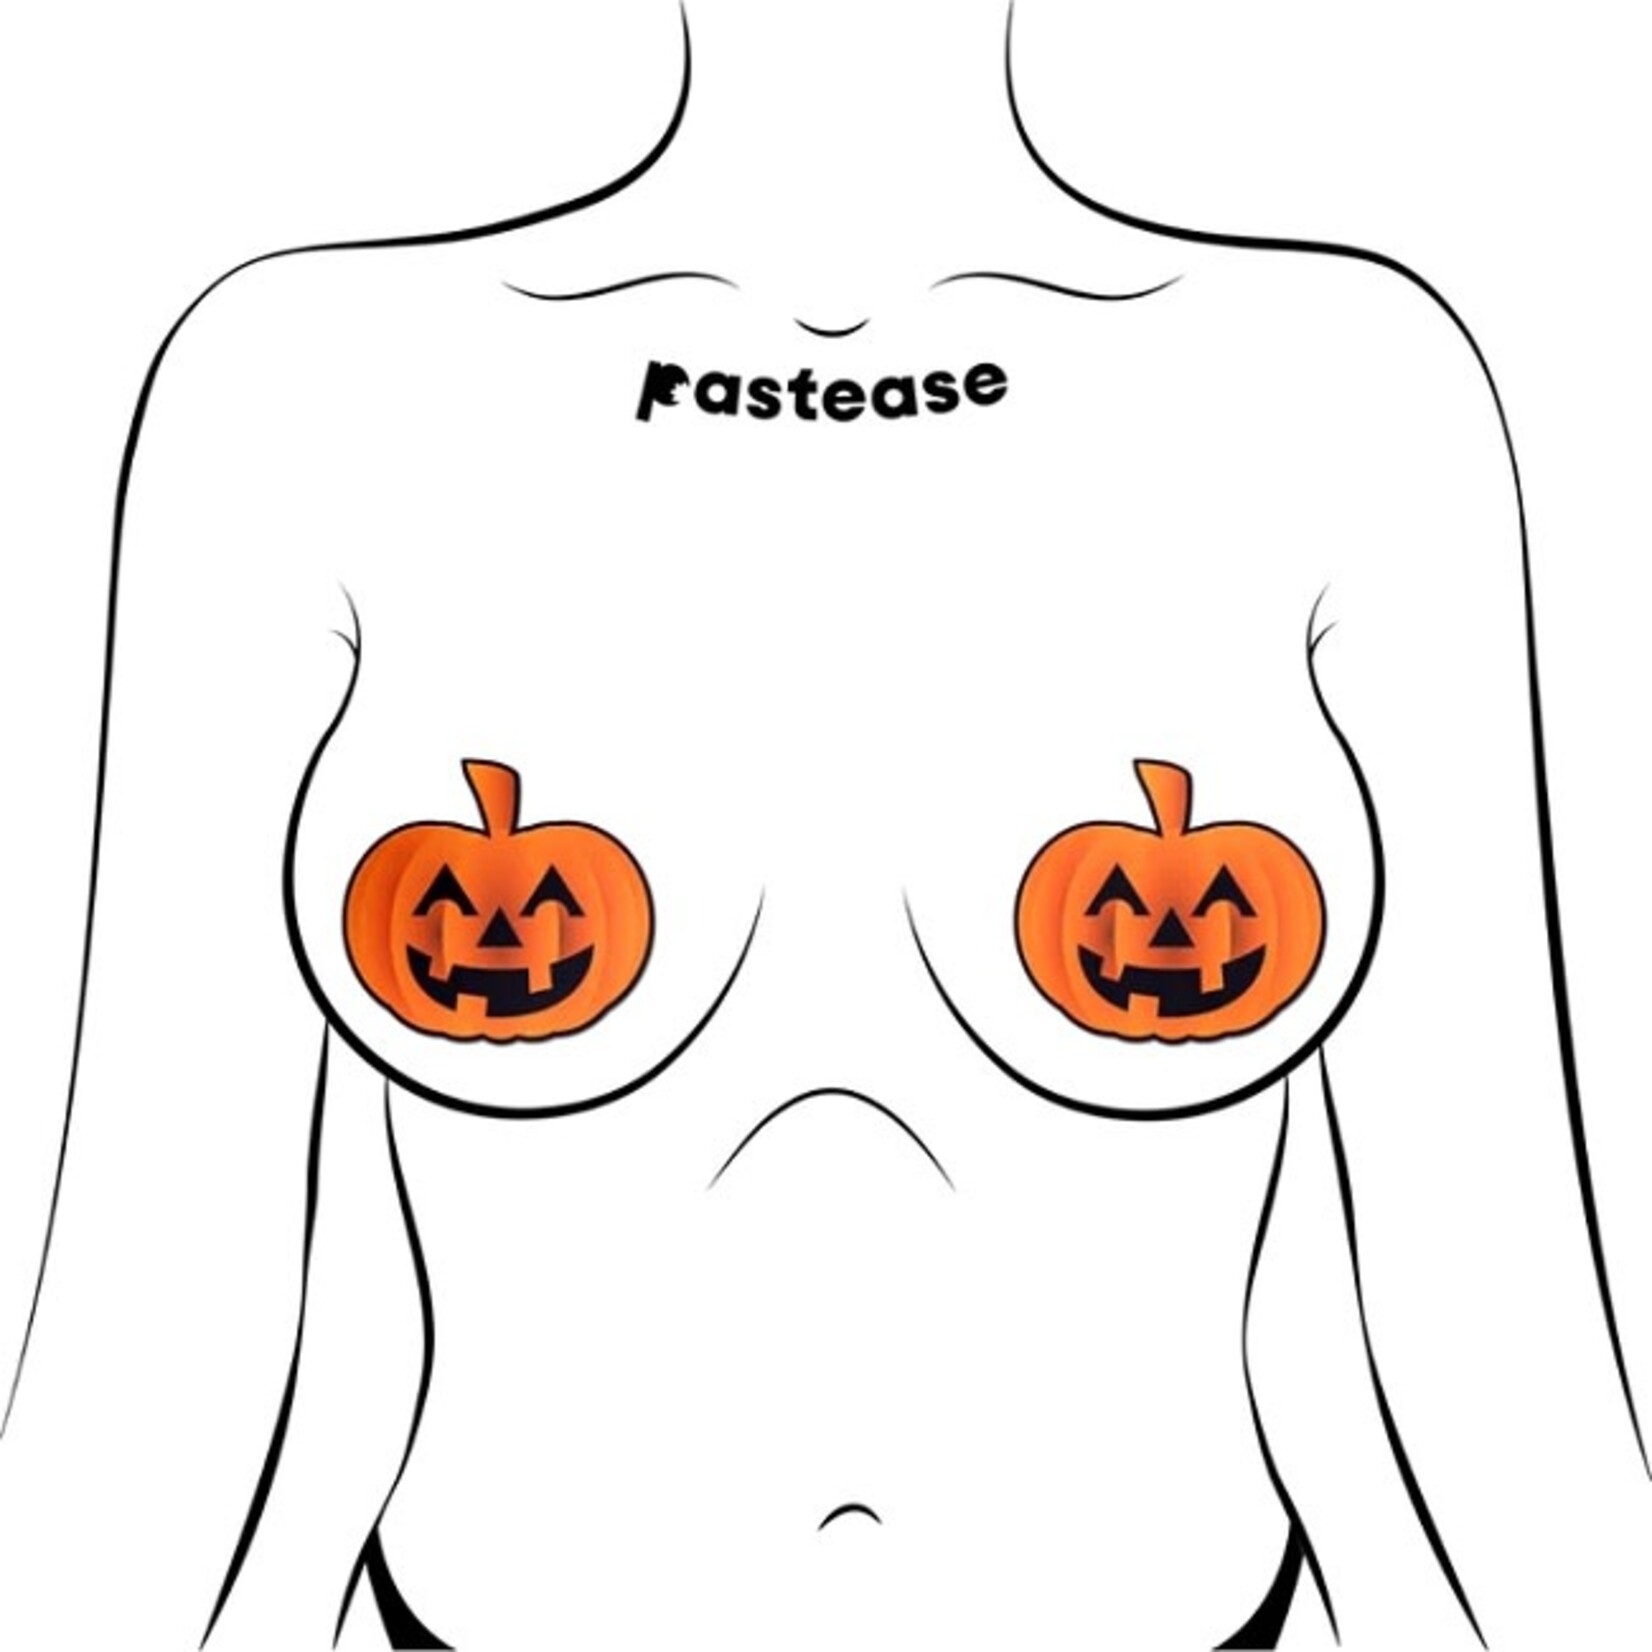 Pastease Pastease Spooky Halloween Jack O' Lantern Nipple Pasties